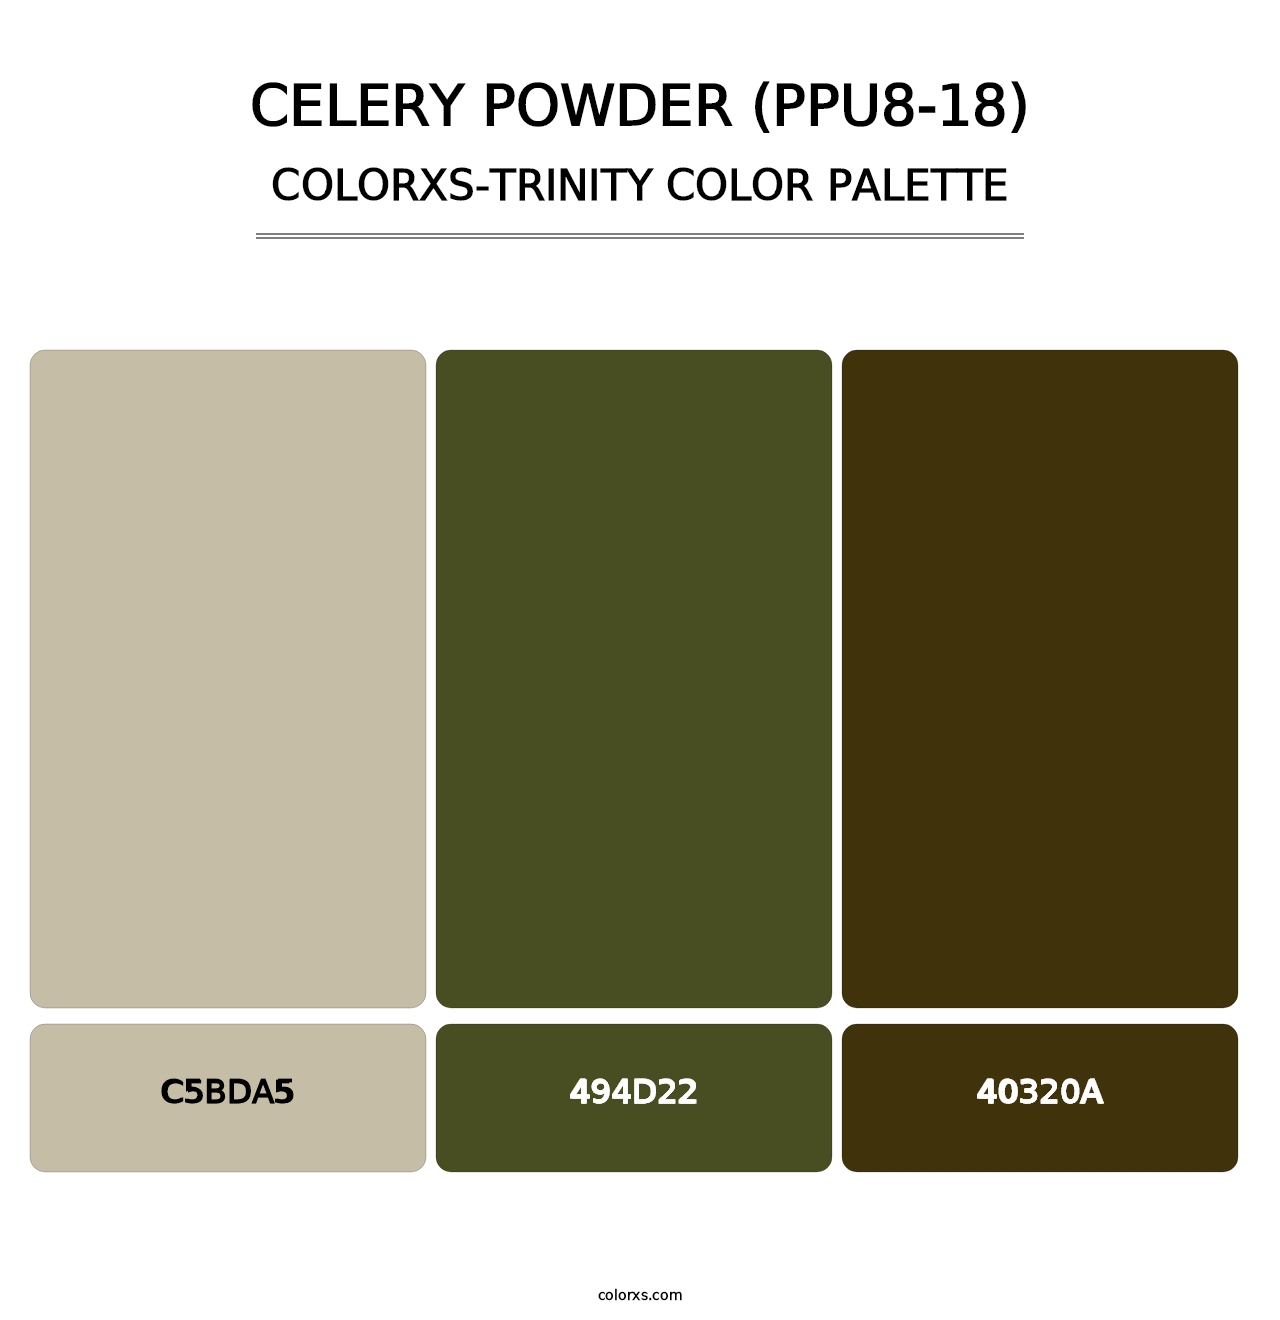 Celery Powder (PPU8-18) - Colorxs Trinity Palette